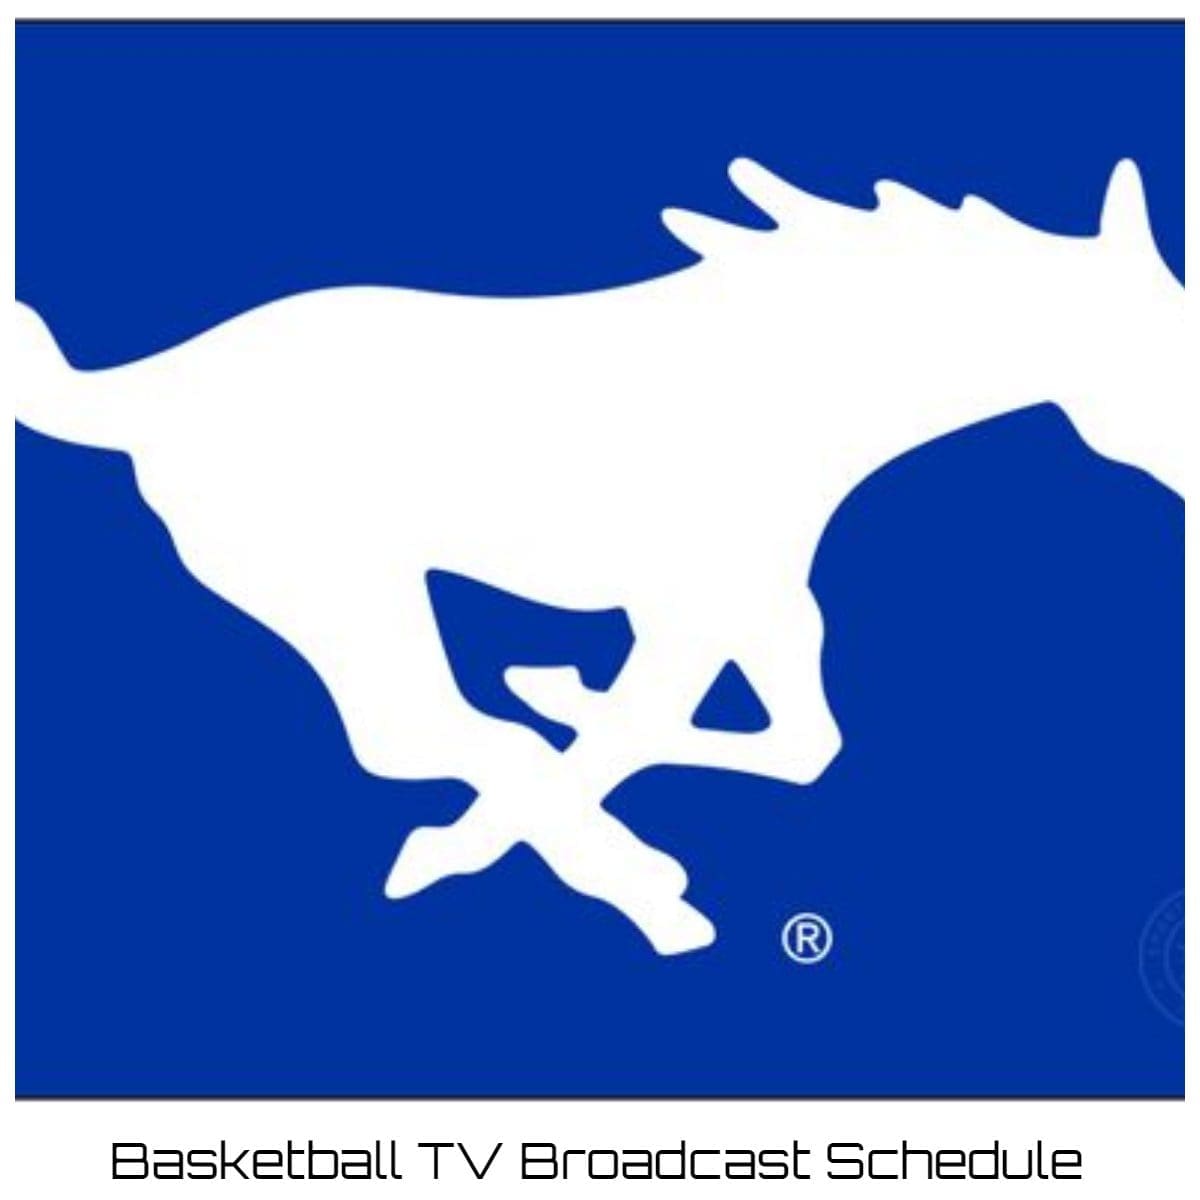 SMU Mustangs Basketball TV Broadcast Schedule